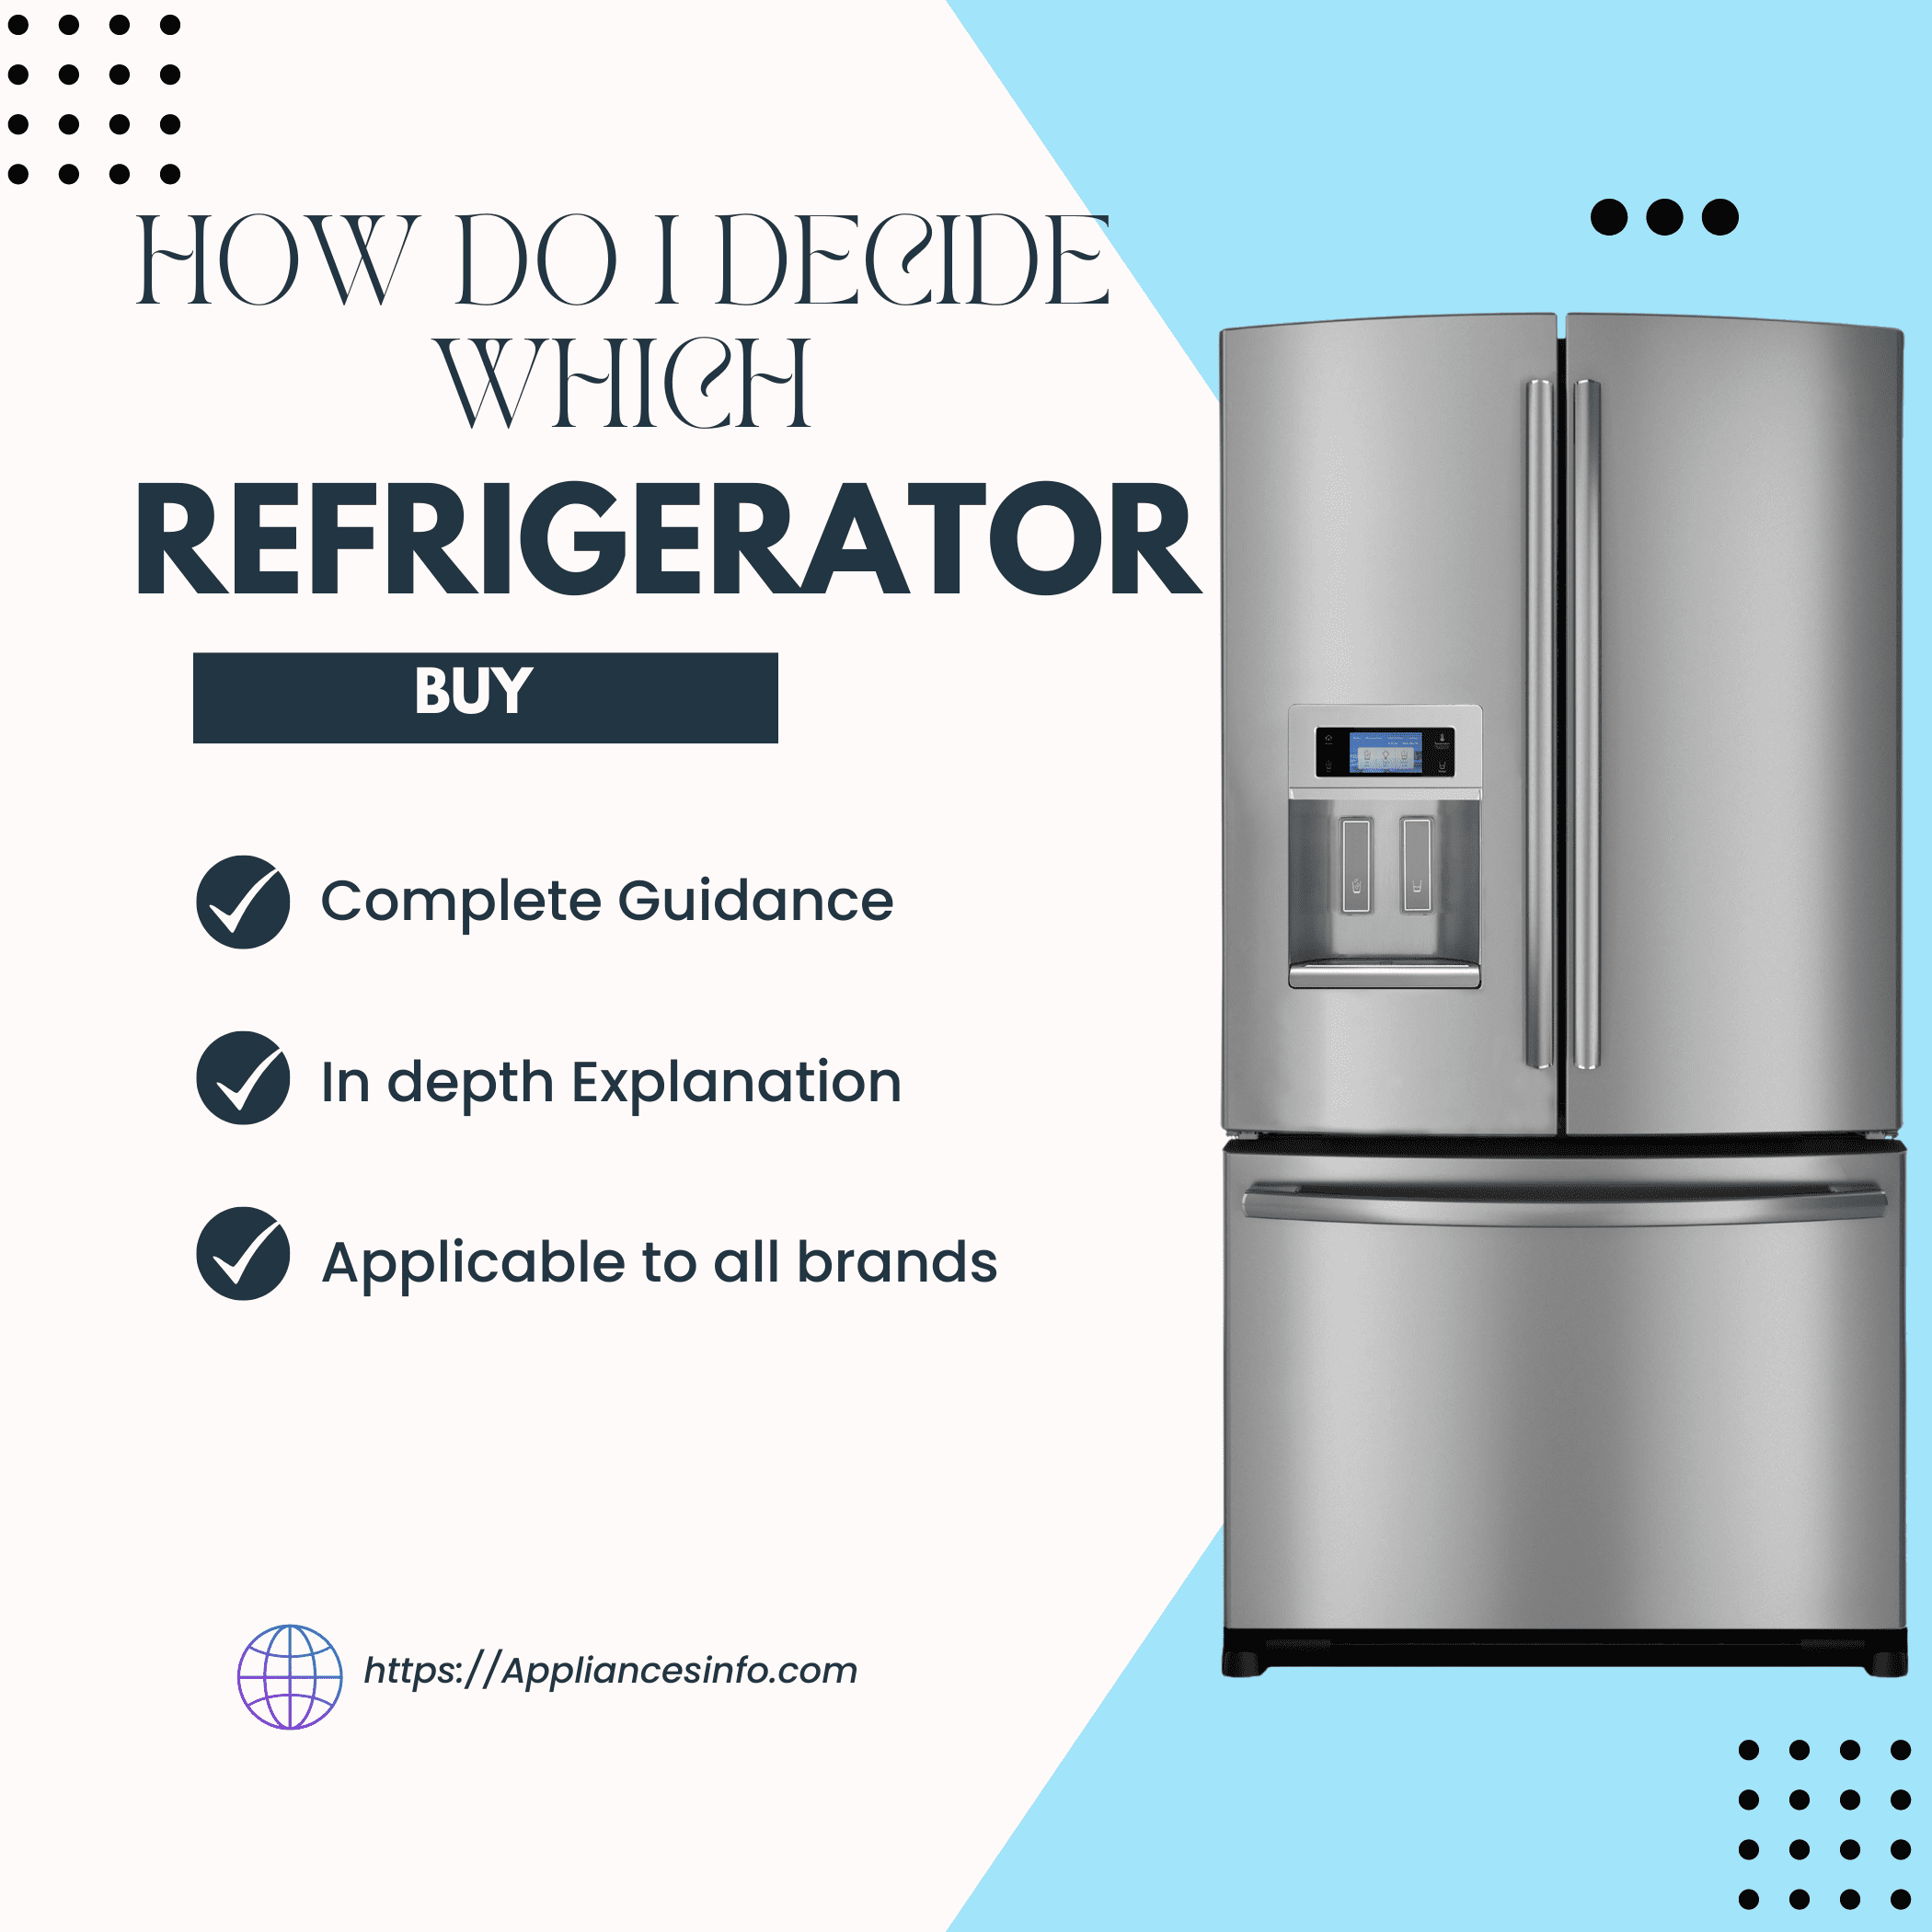 How do I decide which refrigerator to buy?